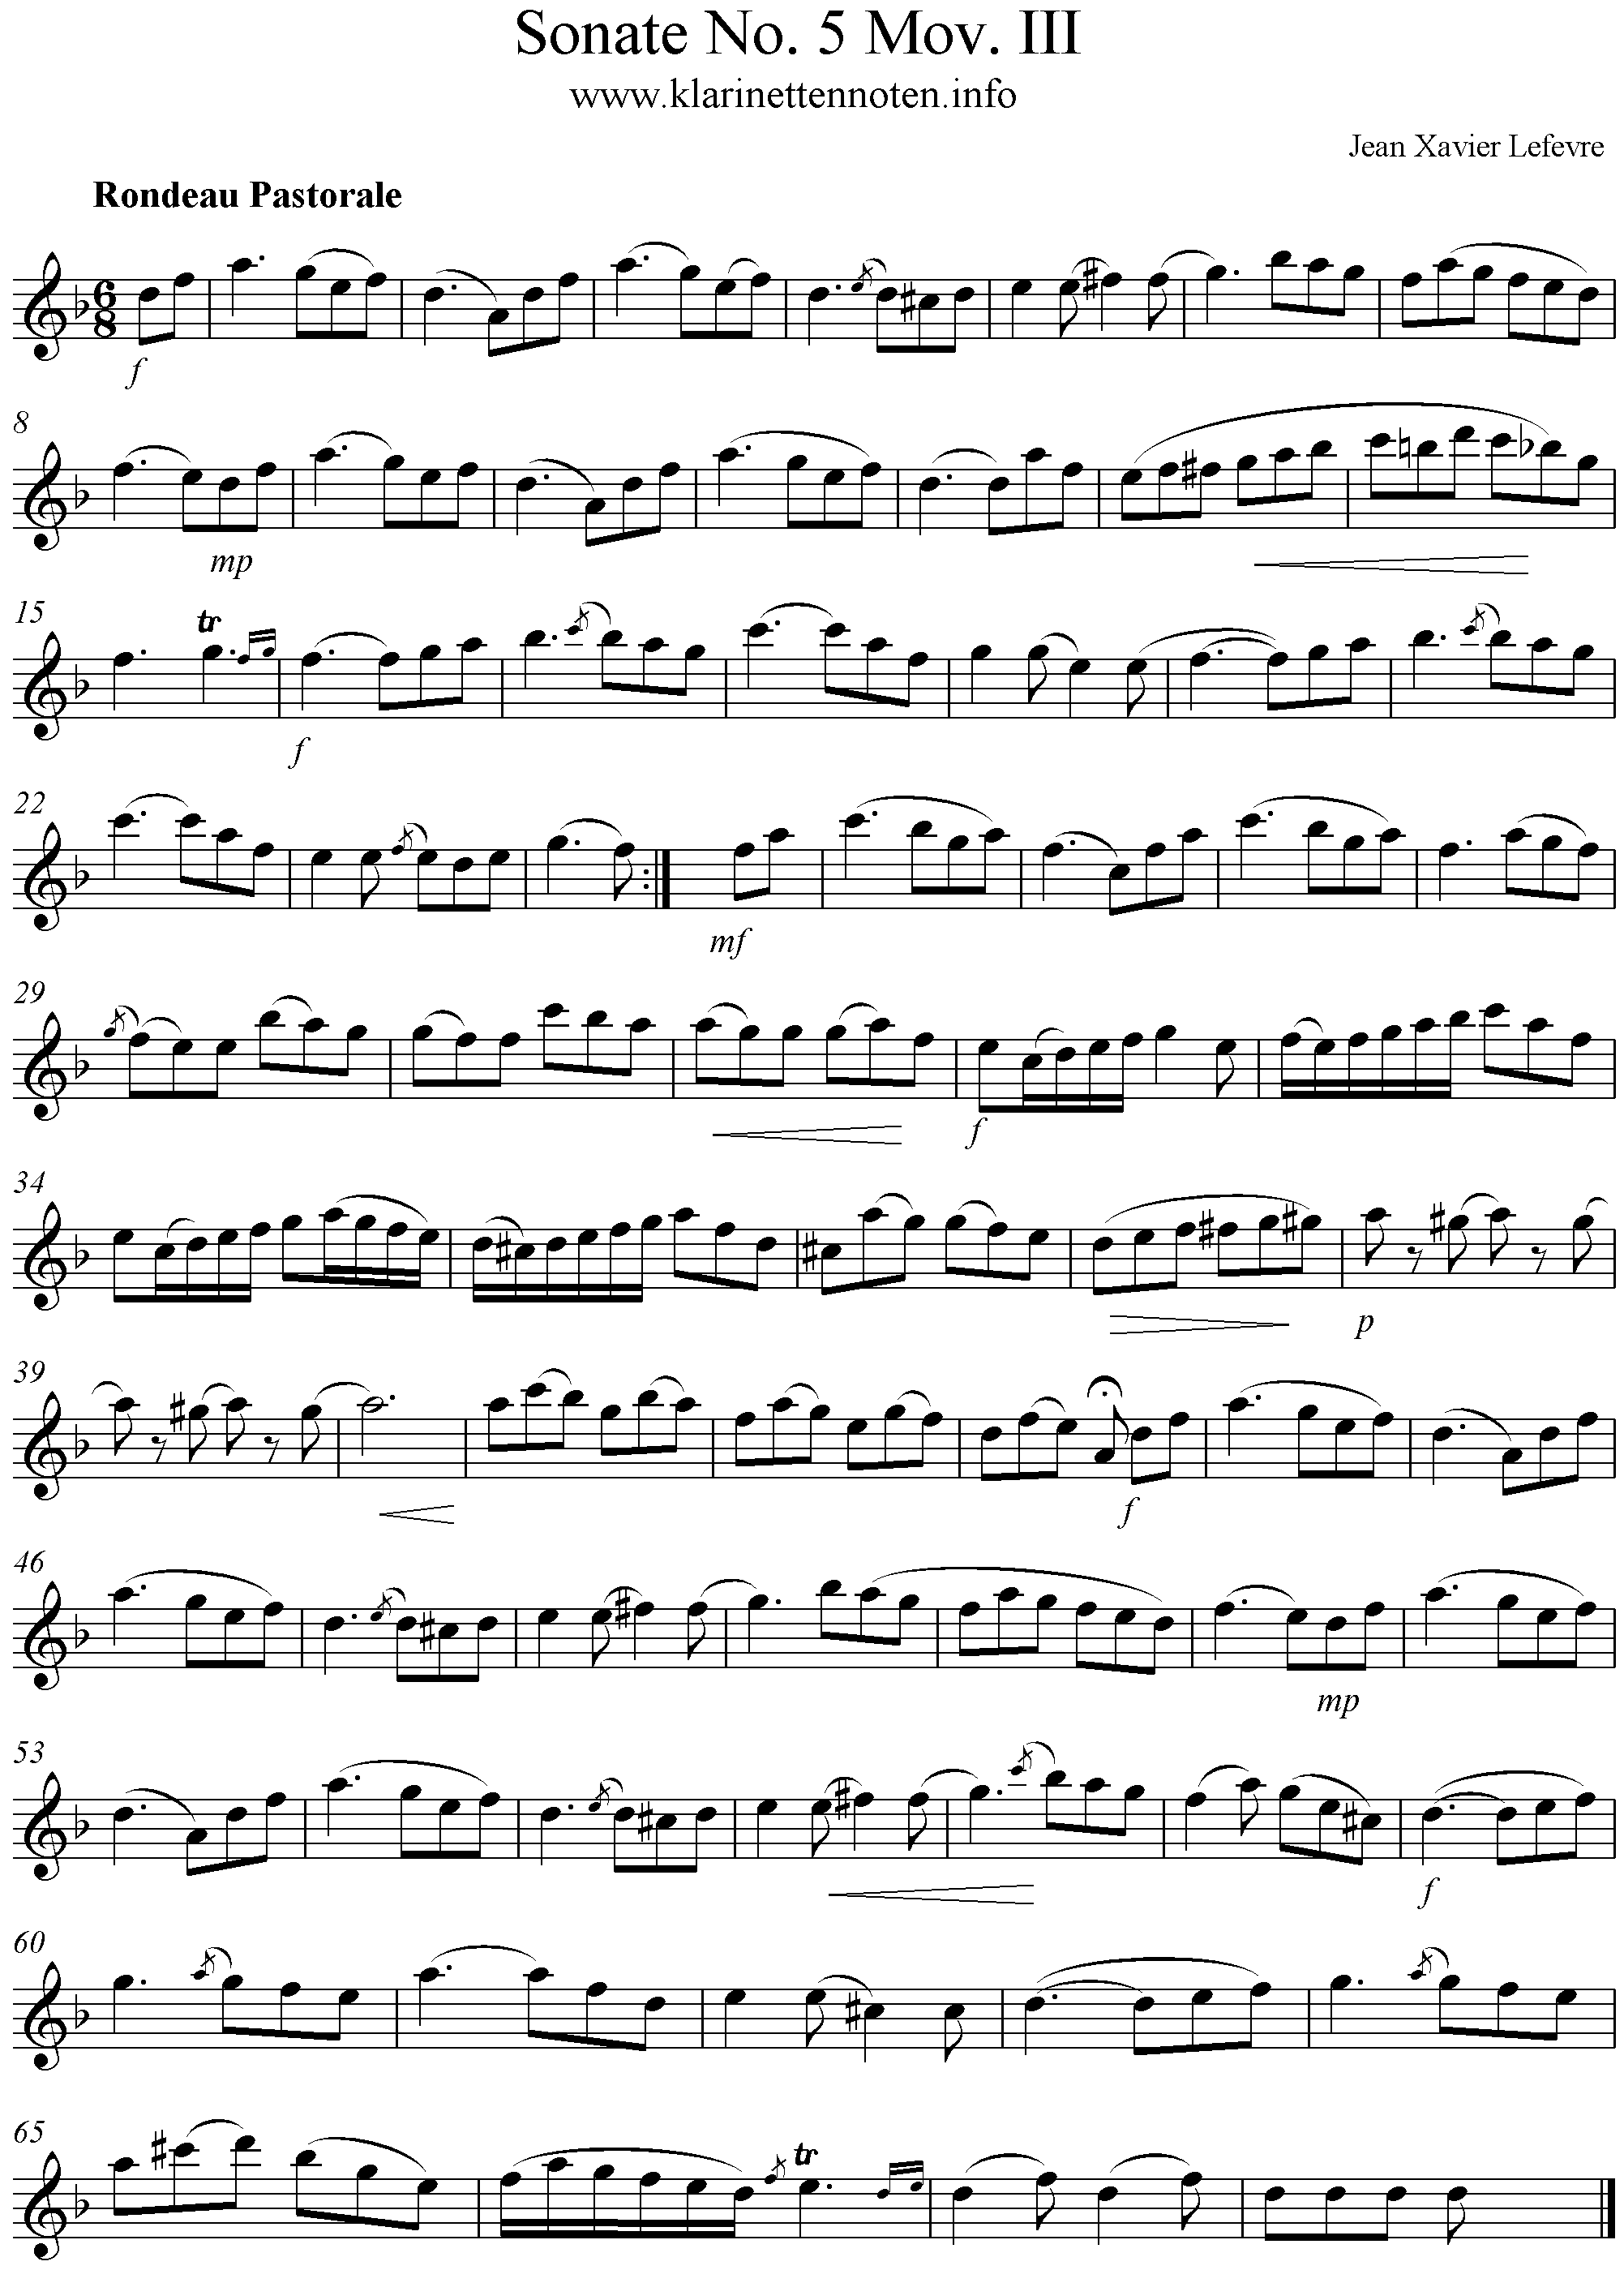 Lefevre Sonata No. 5 Mov. III Rondo pastorale